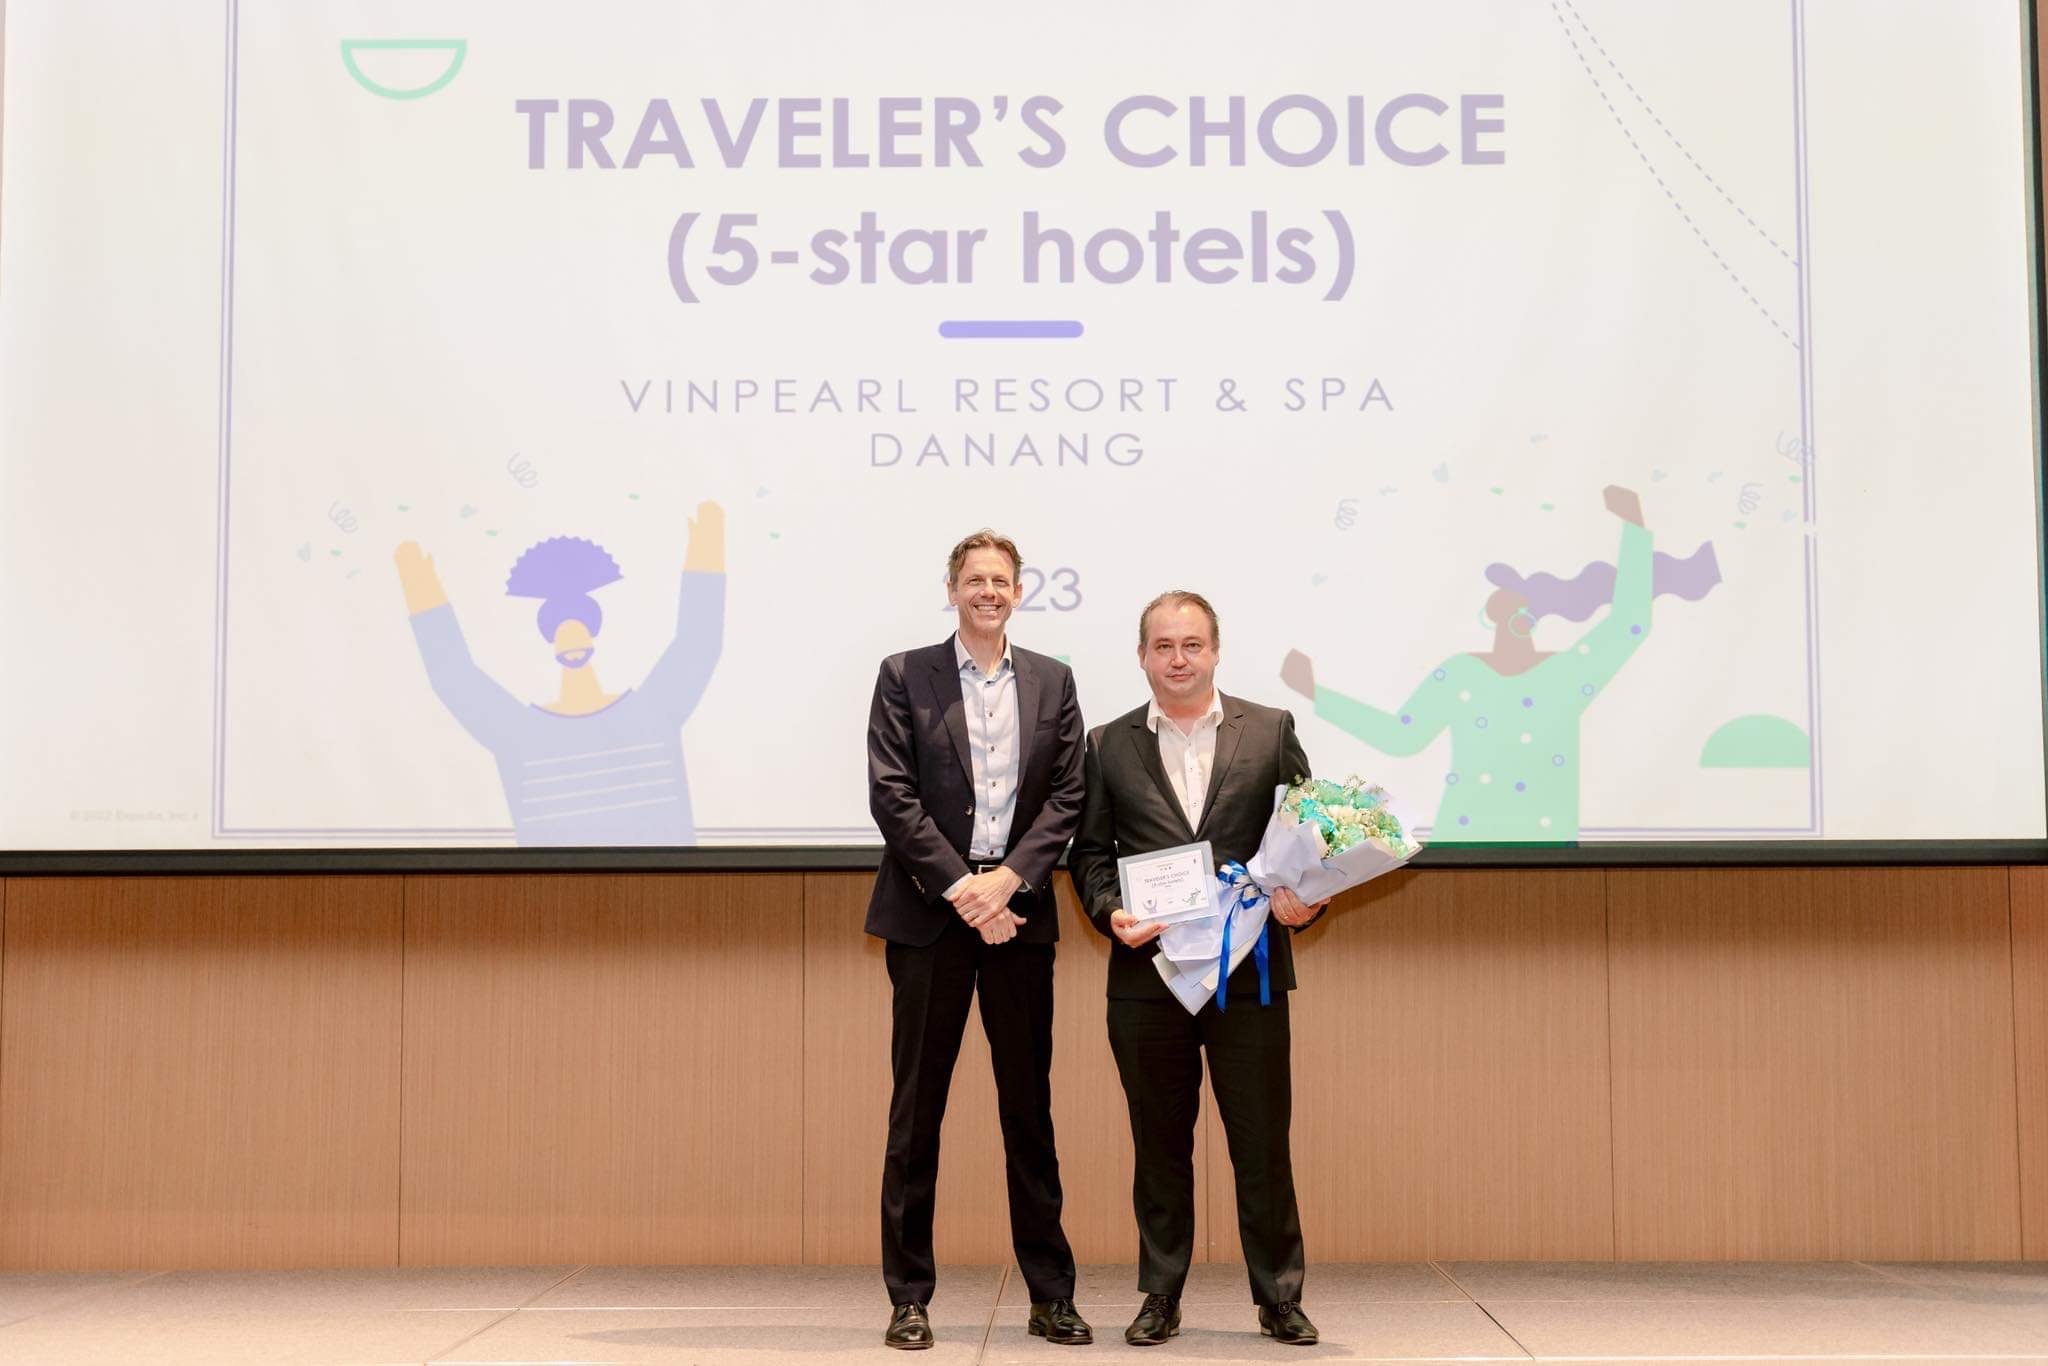 Giải thưởng “Expedia Traveller's Choice”